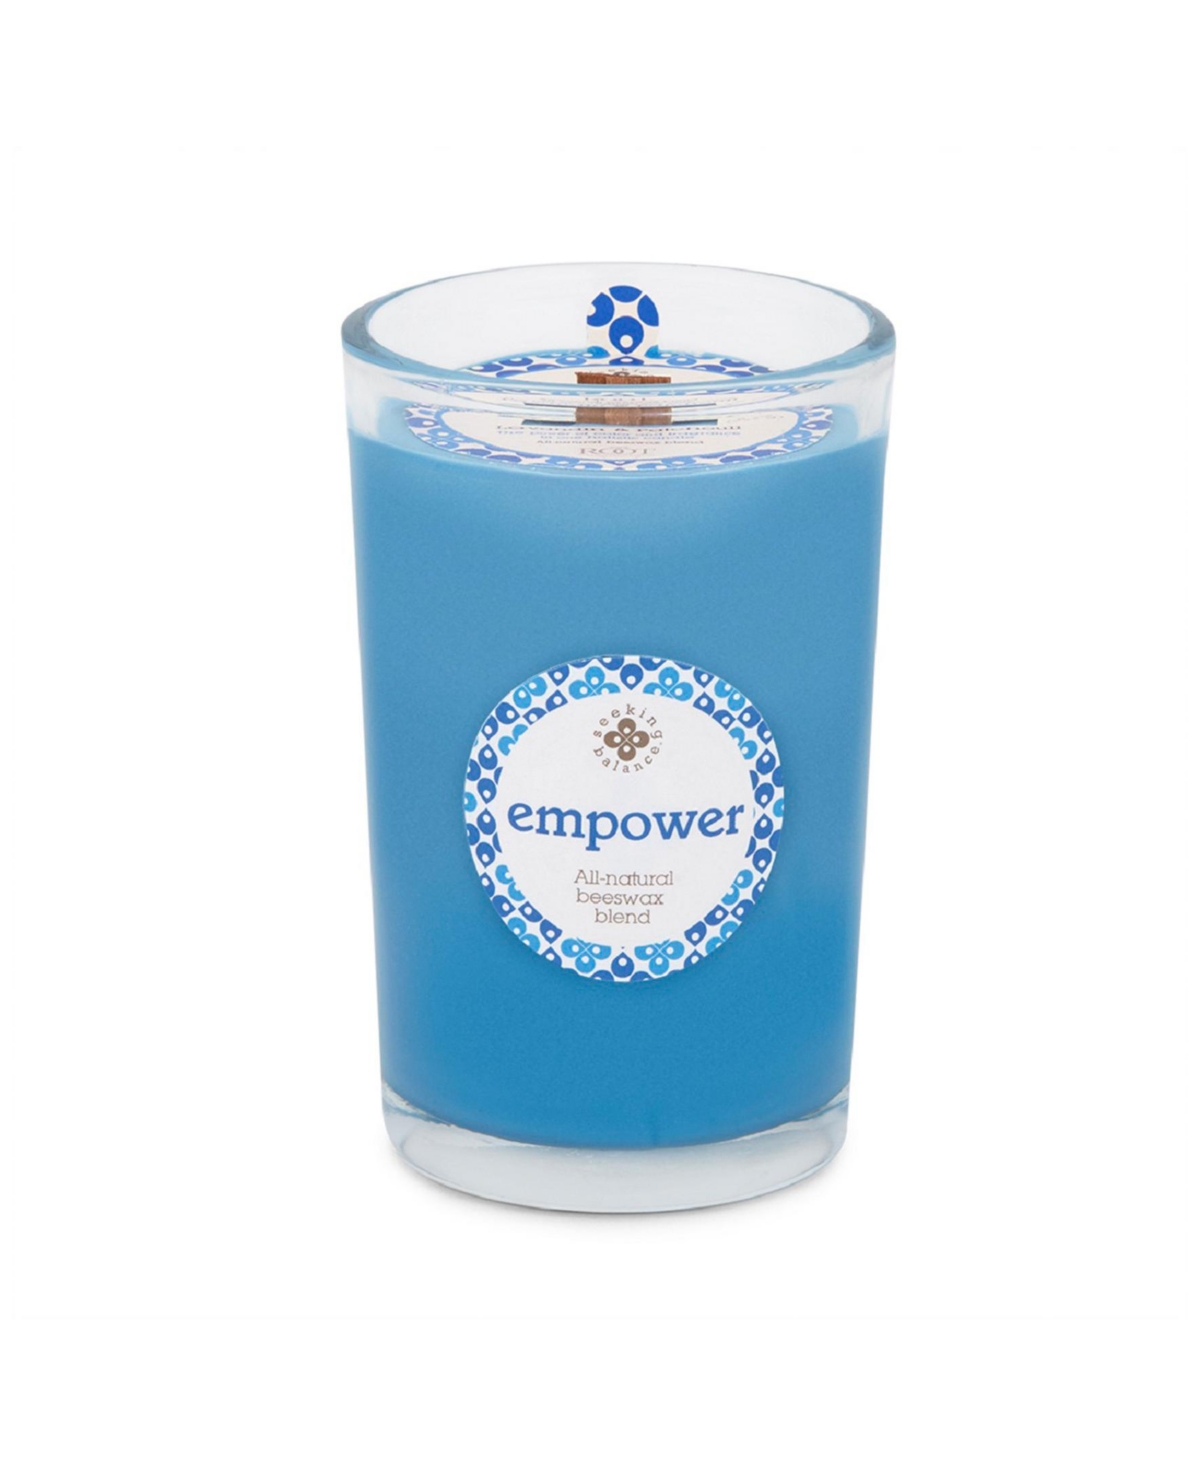 Seeking Balance Empower Lavandin Patchouli Spa Jar Candle, 8 oz - Sapphire